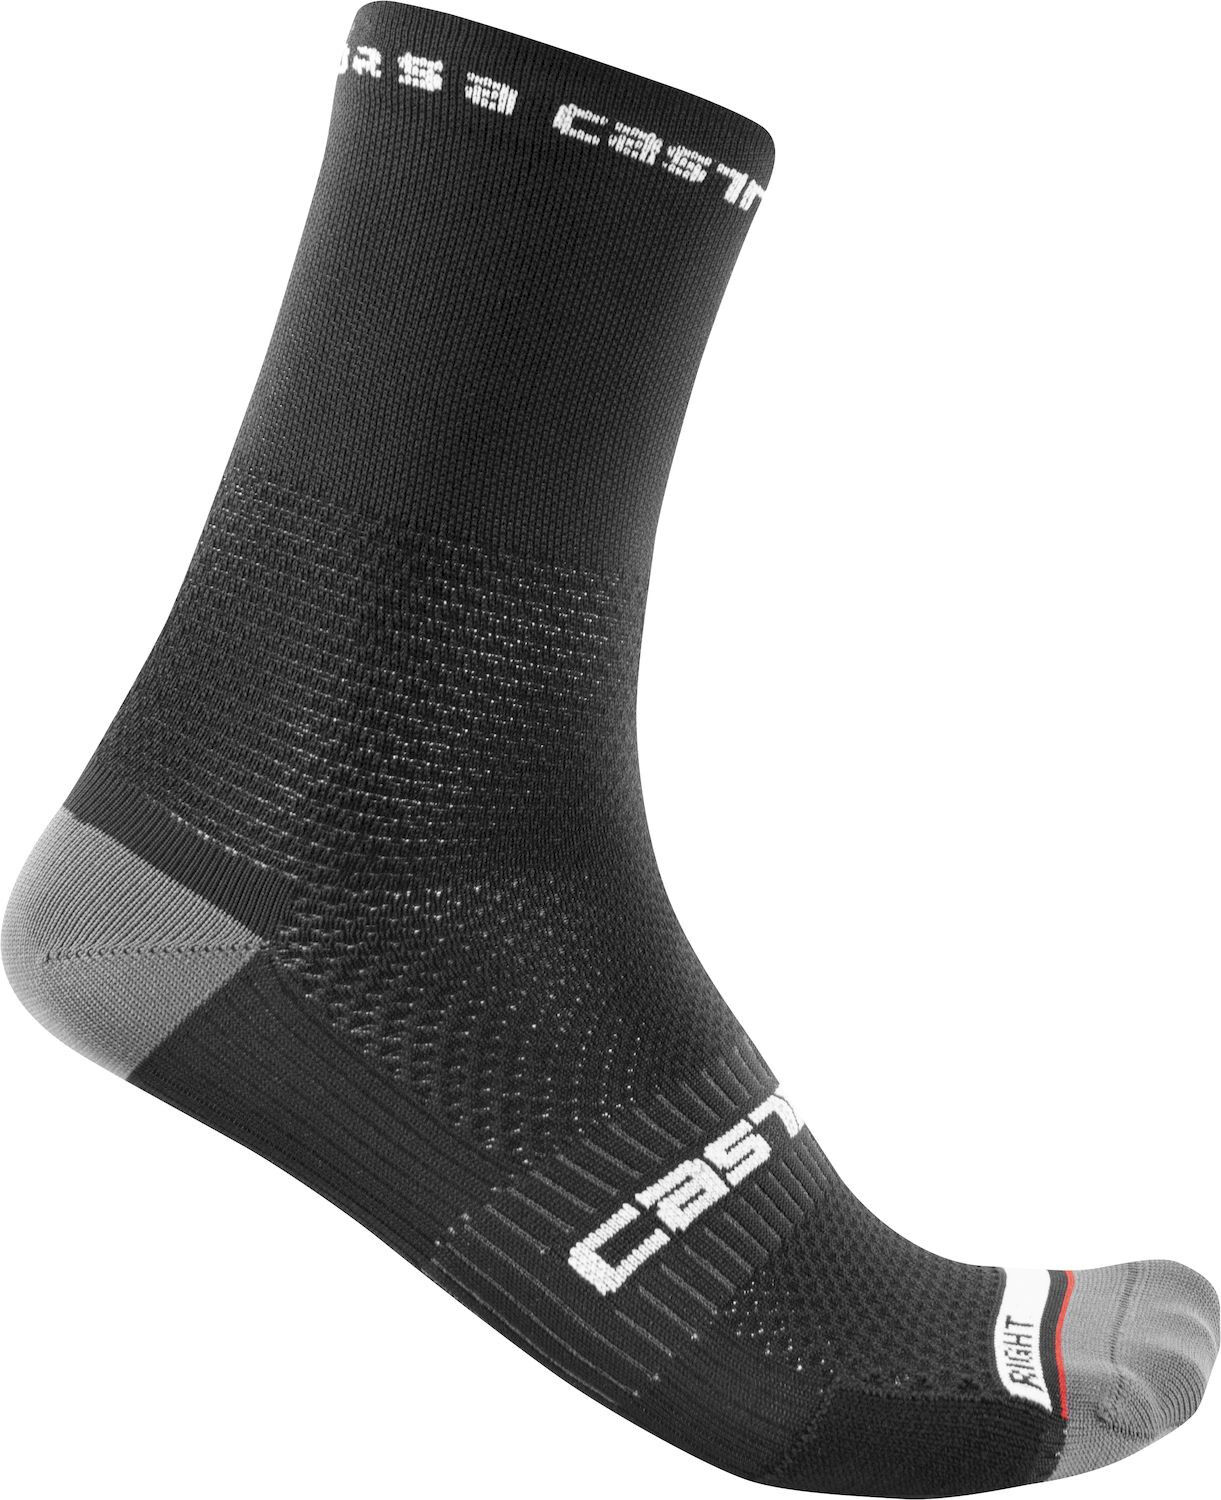 Castelli Rosso Corsa Pro 15 - Cycling socks